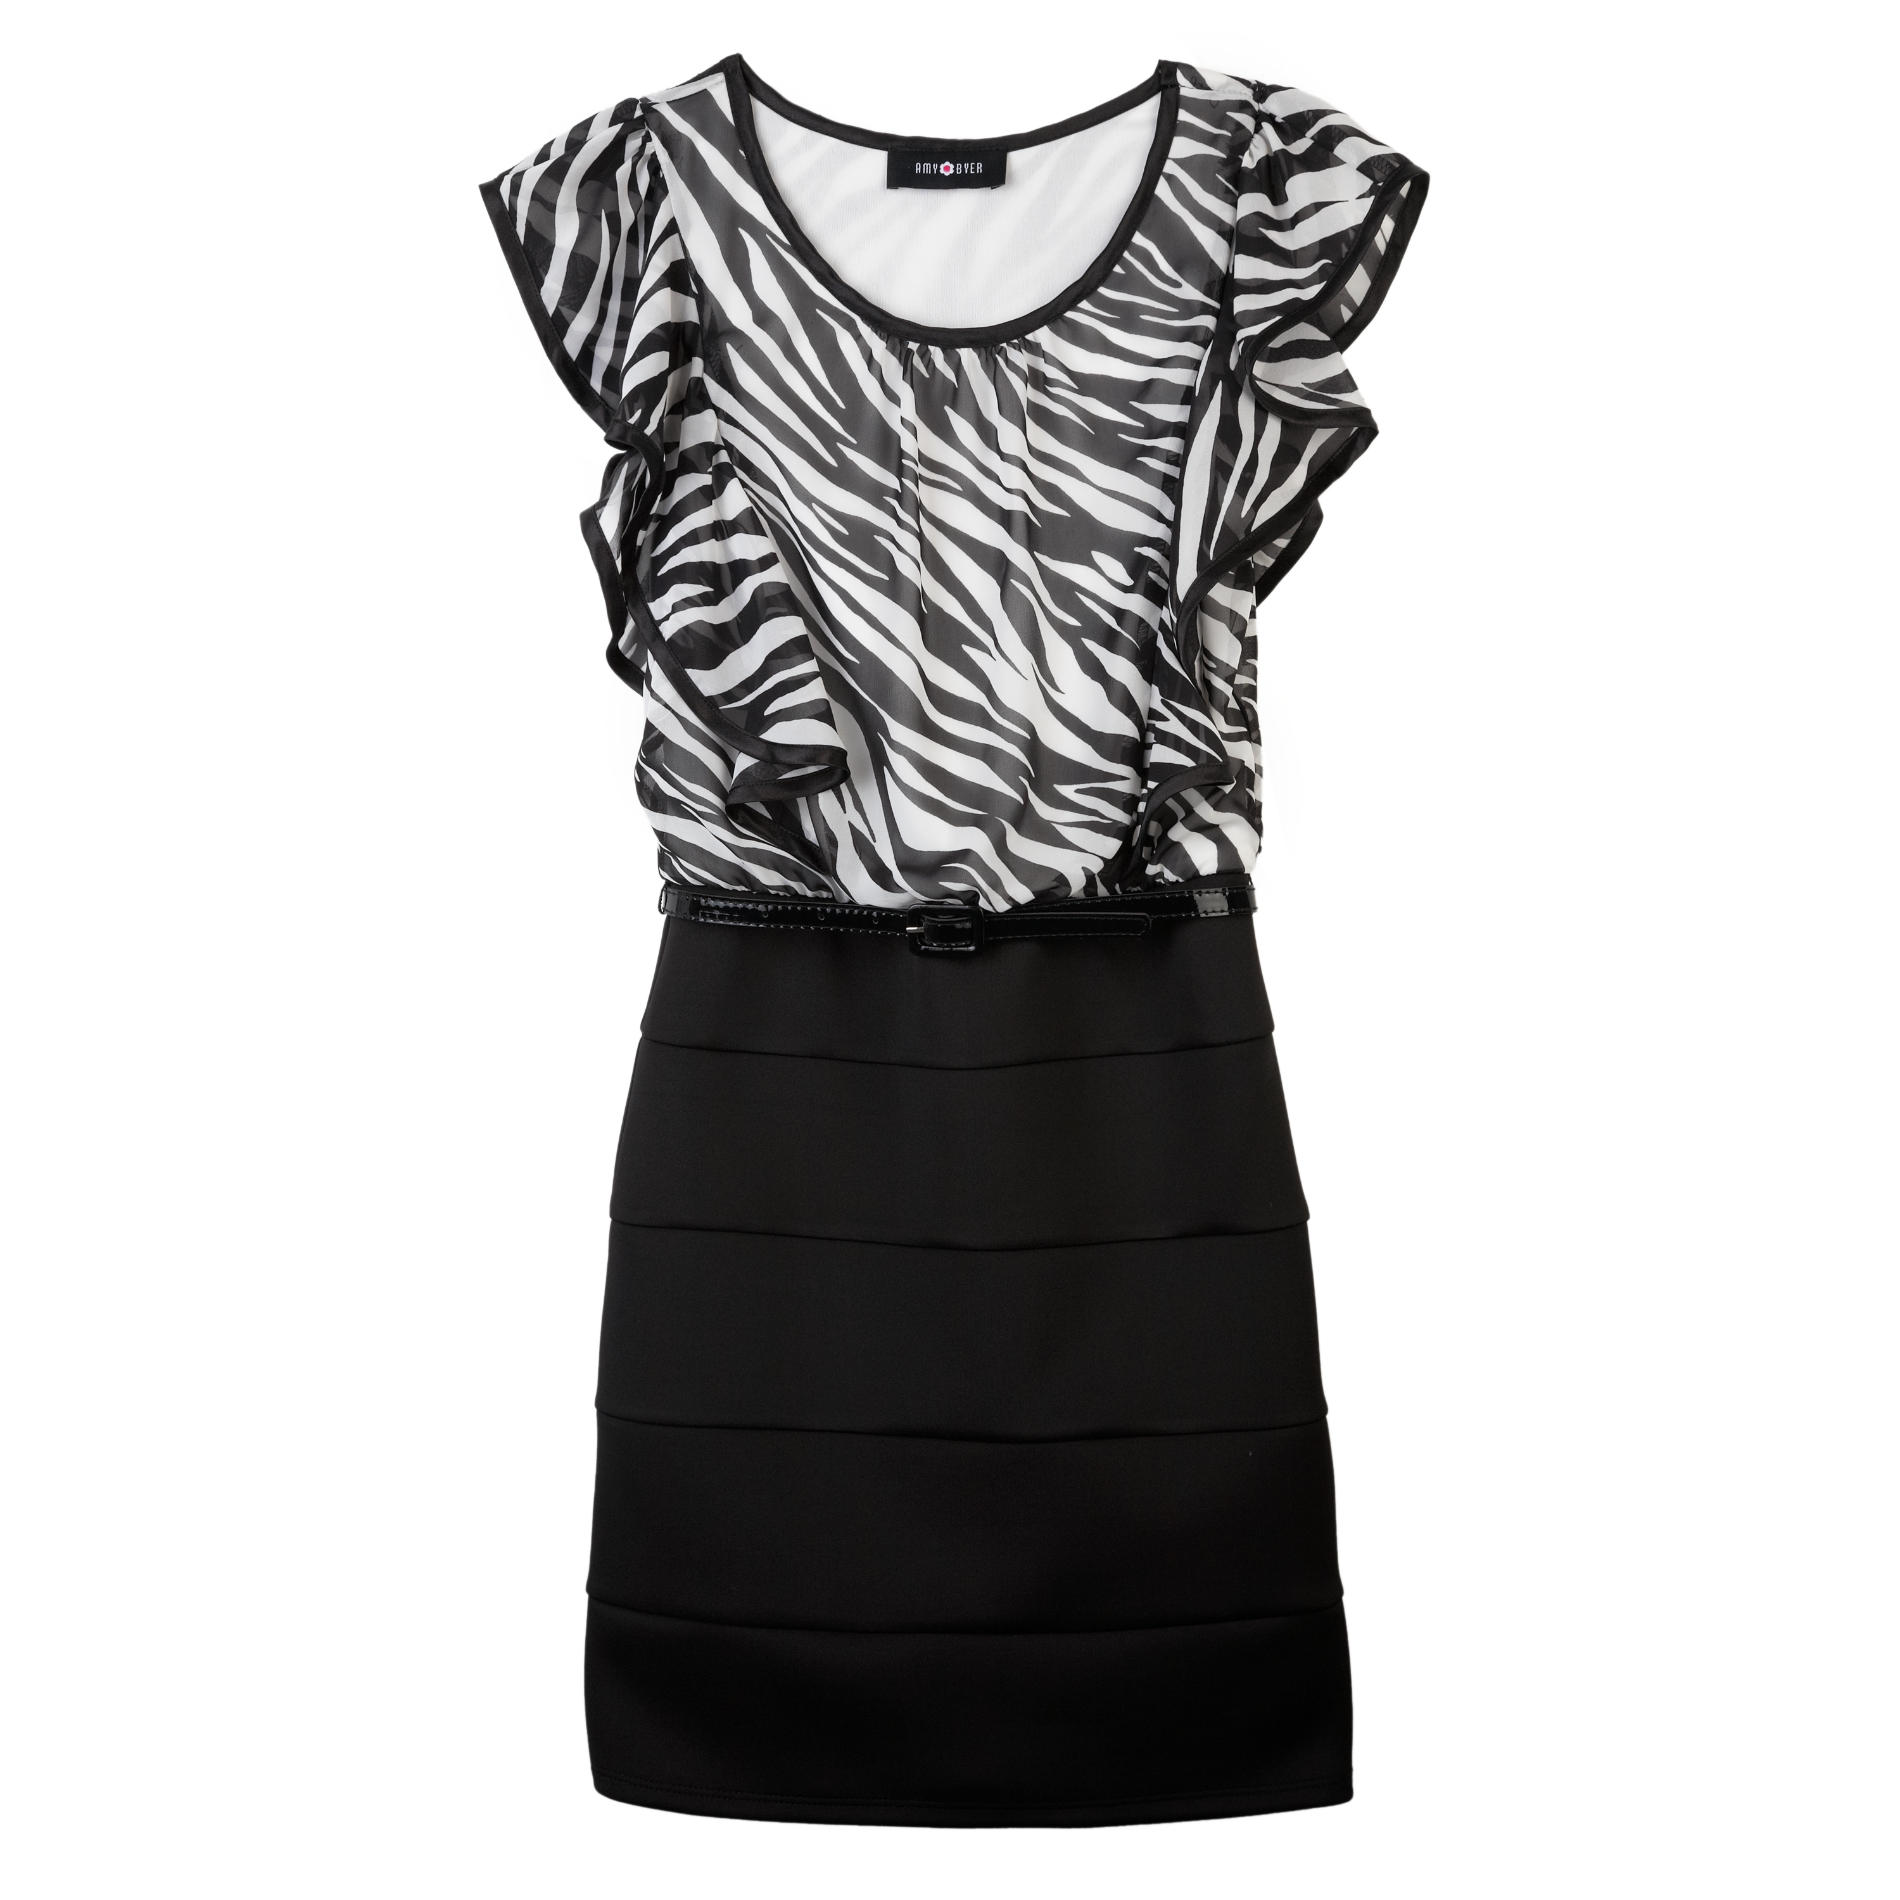 Amy's Closet Girl's Flutter-Sleeve Party Dress - Zebra Print